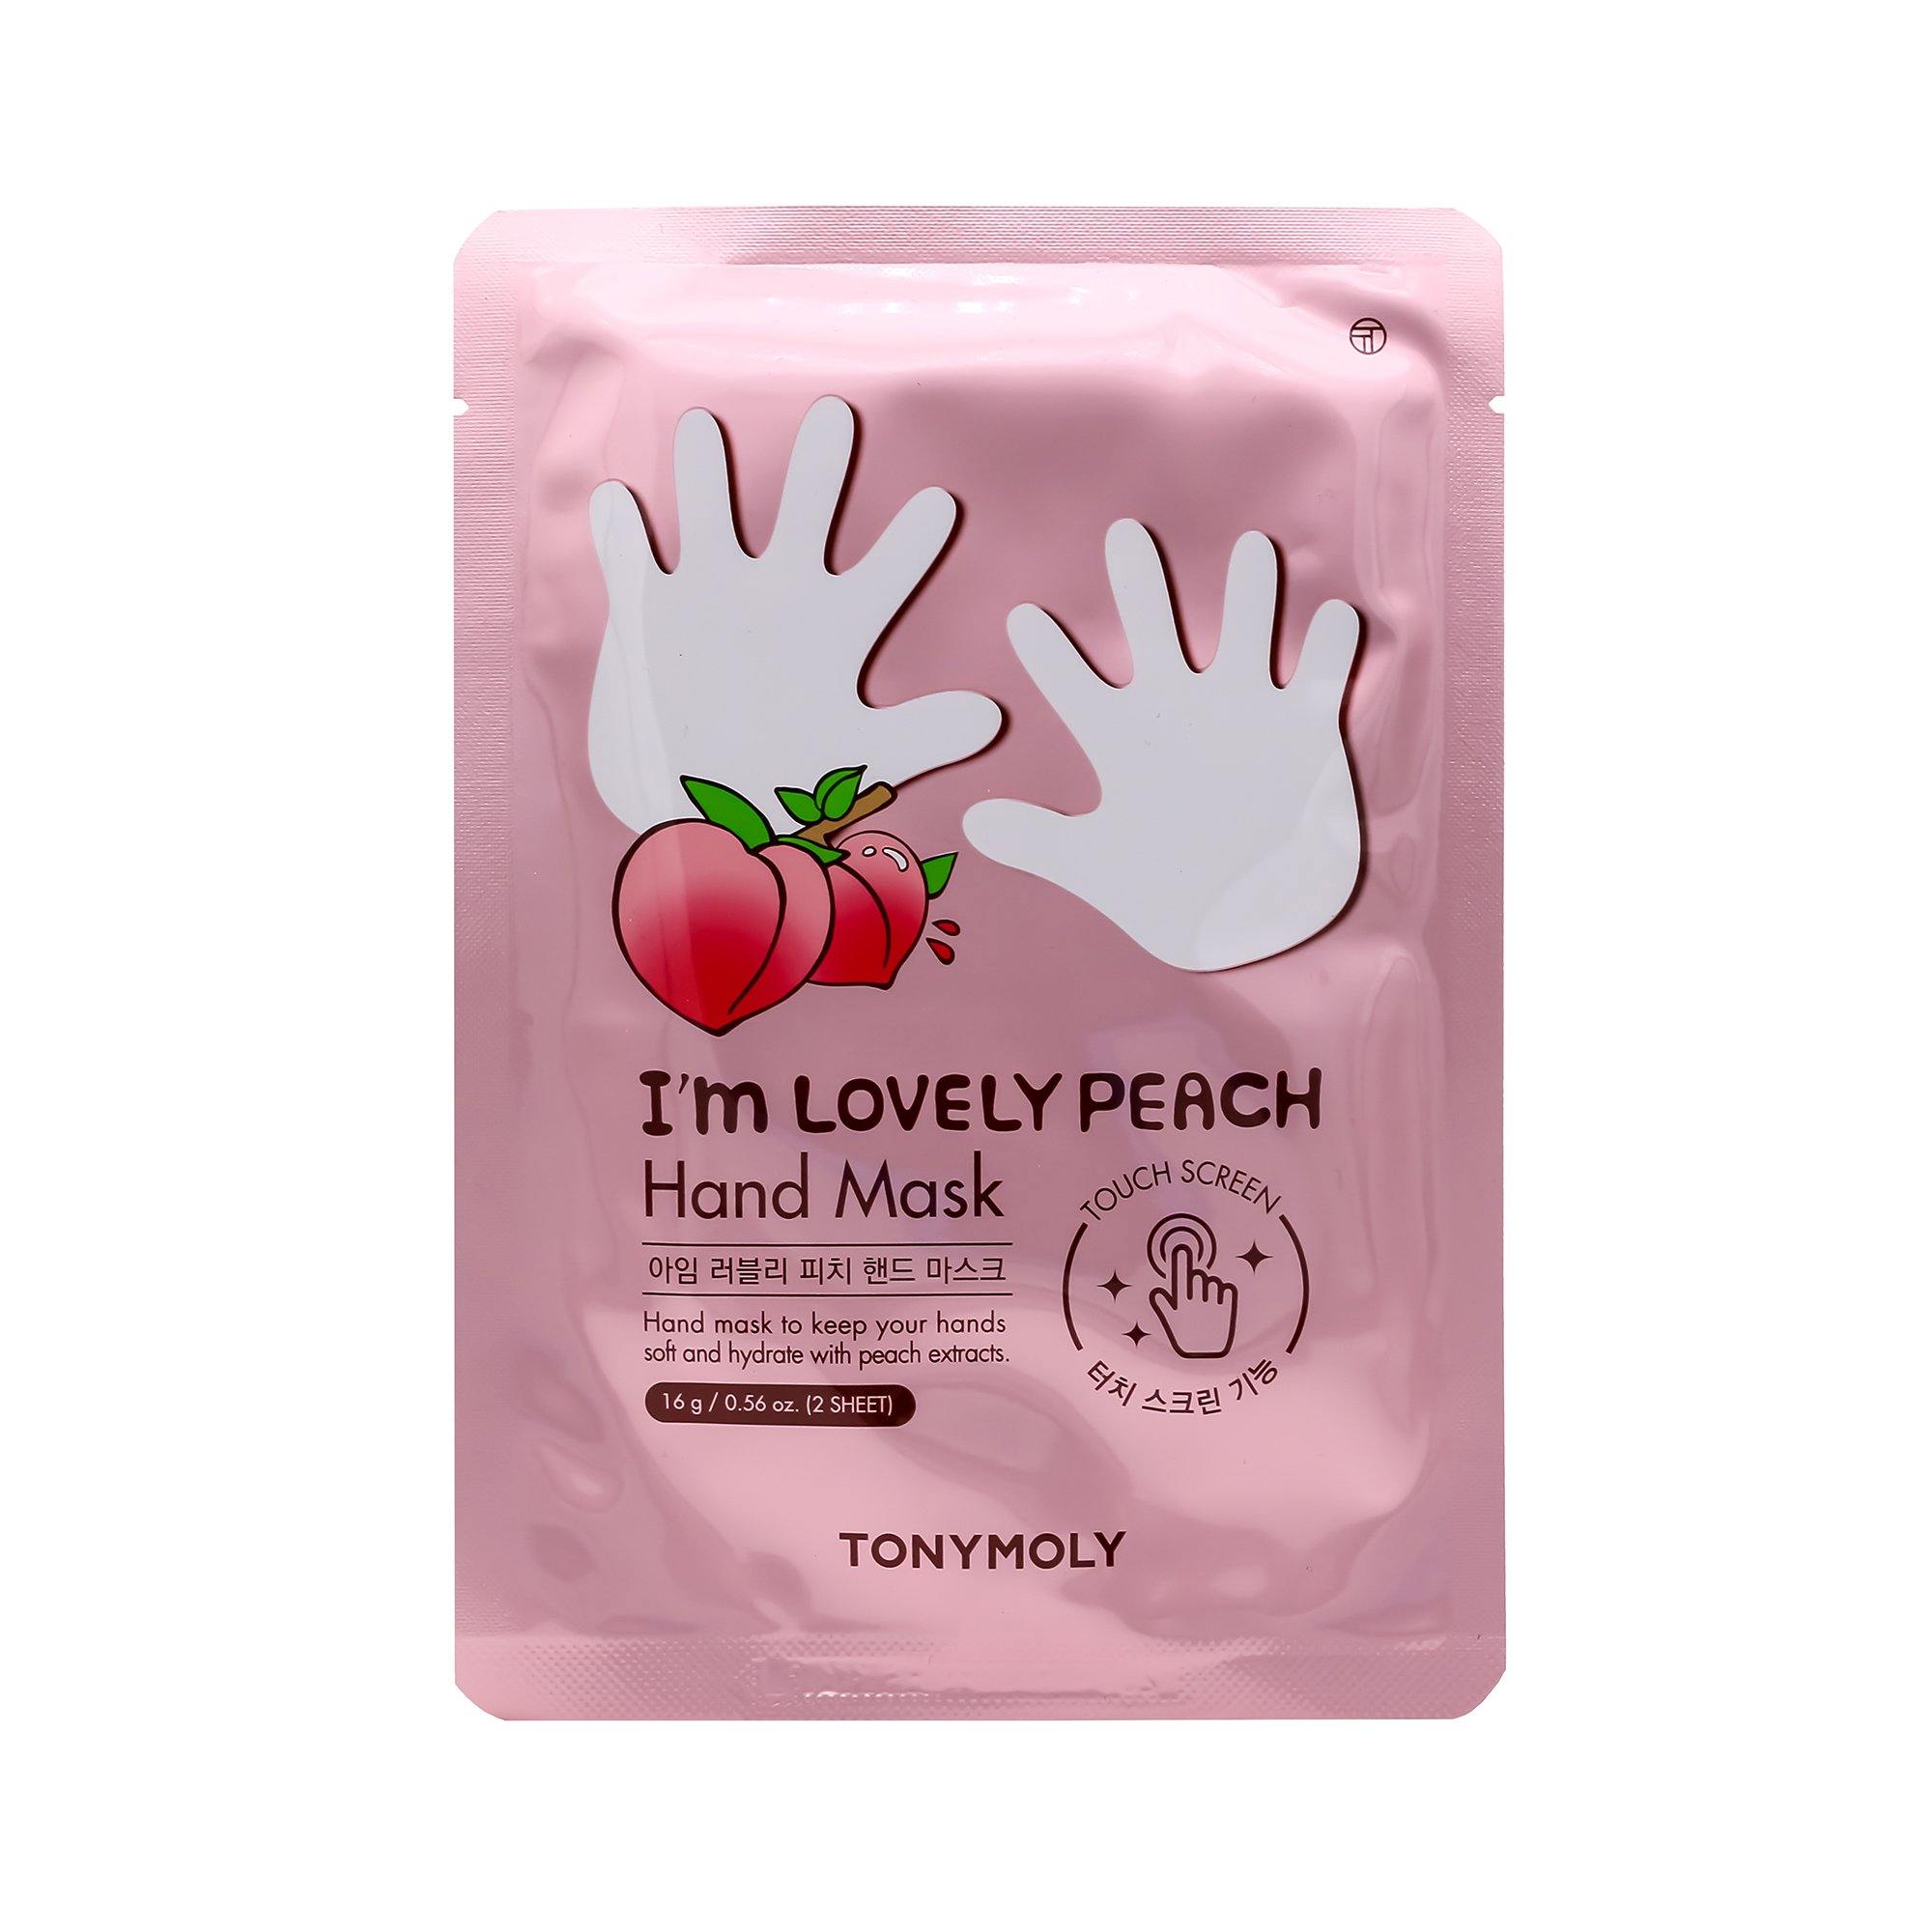 TONYMOLY Peach "I'm Lovely" Hand Mask - TONYMOLY OFFICIAL